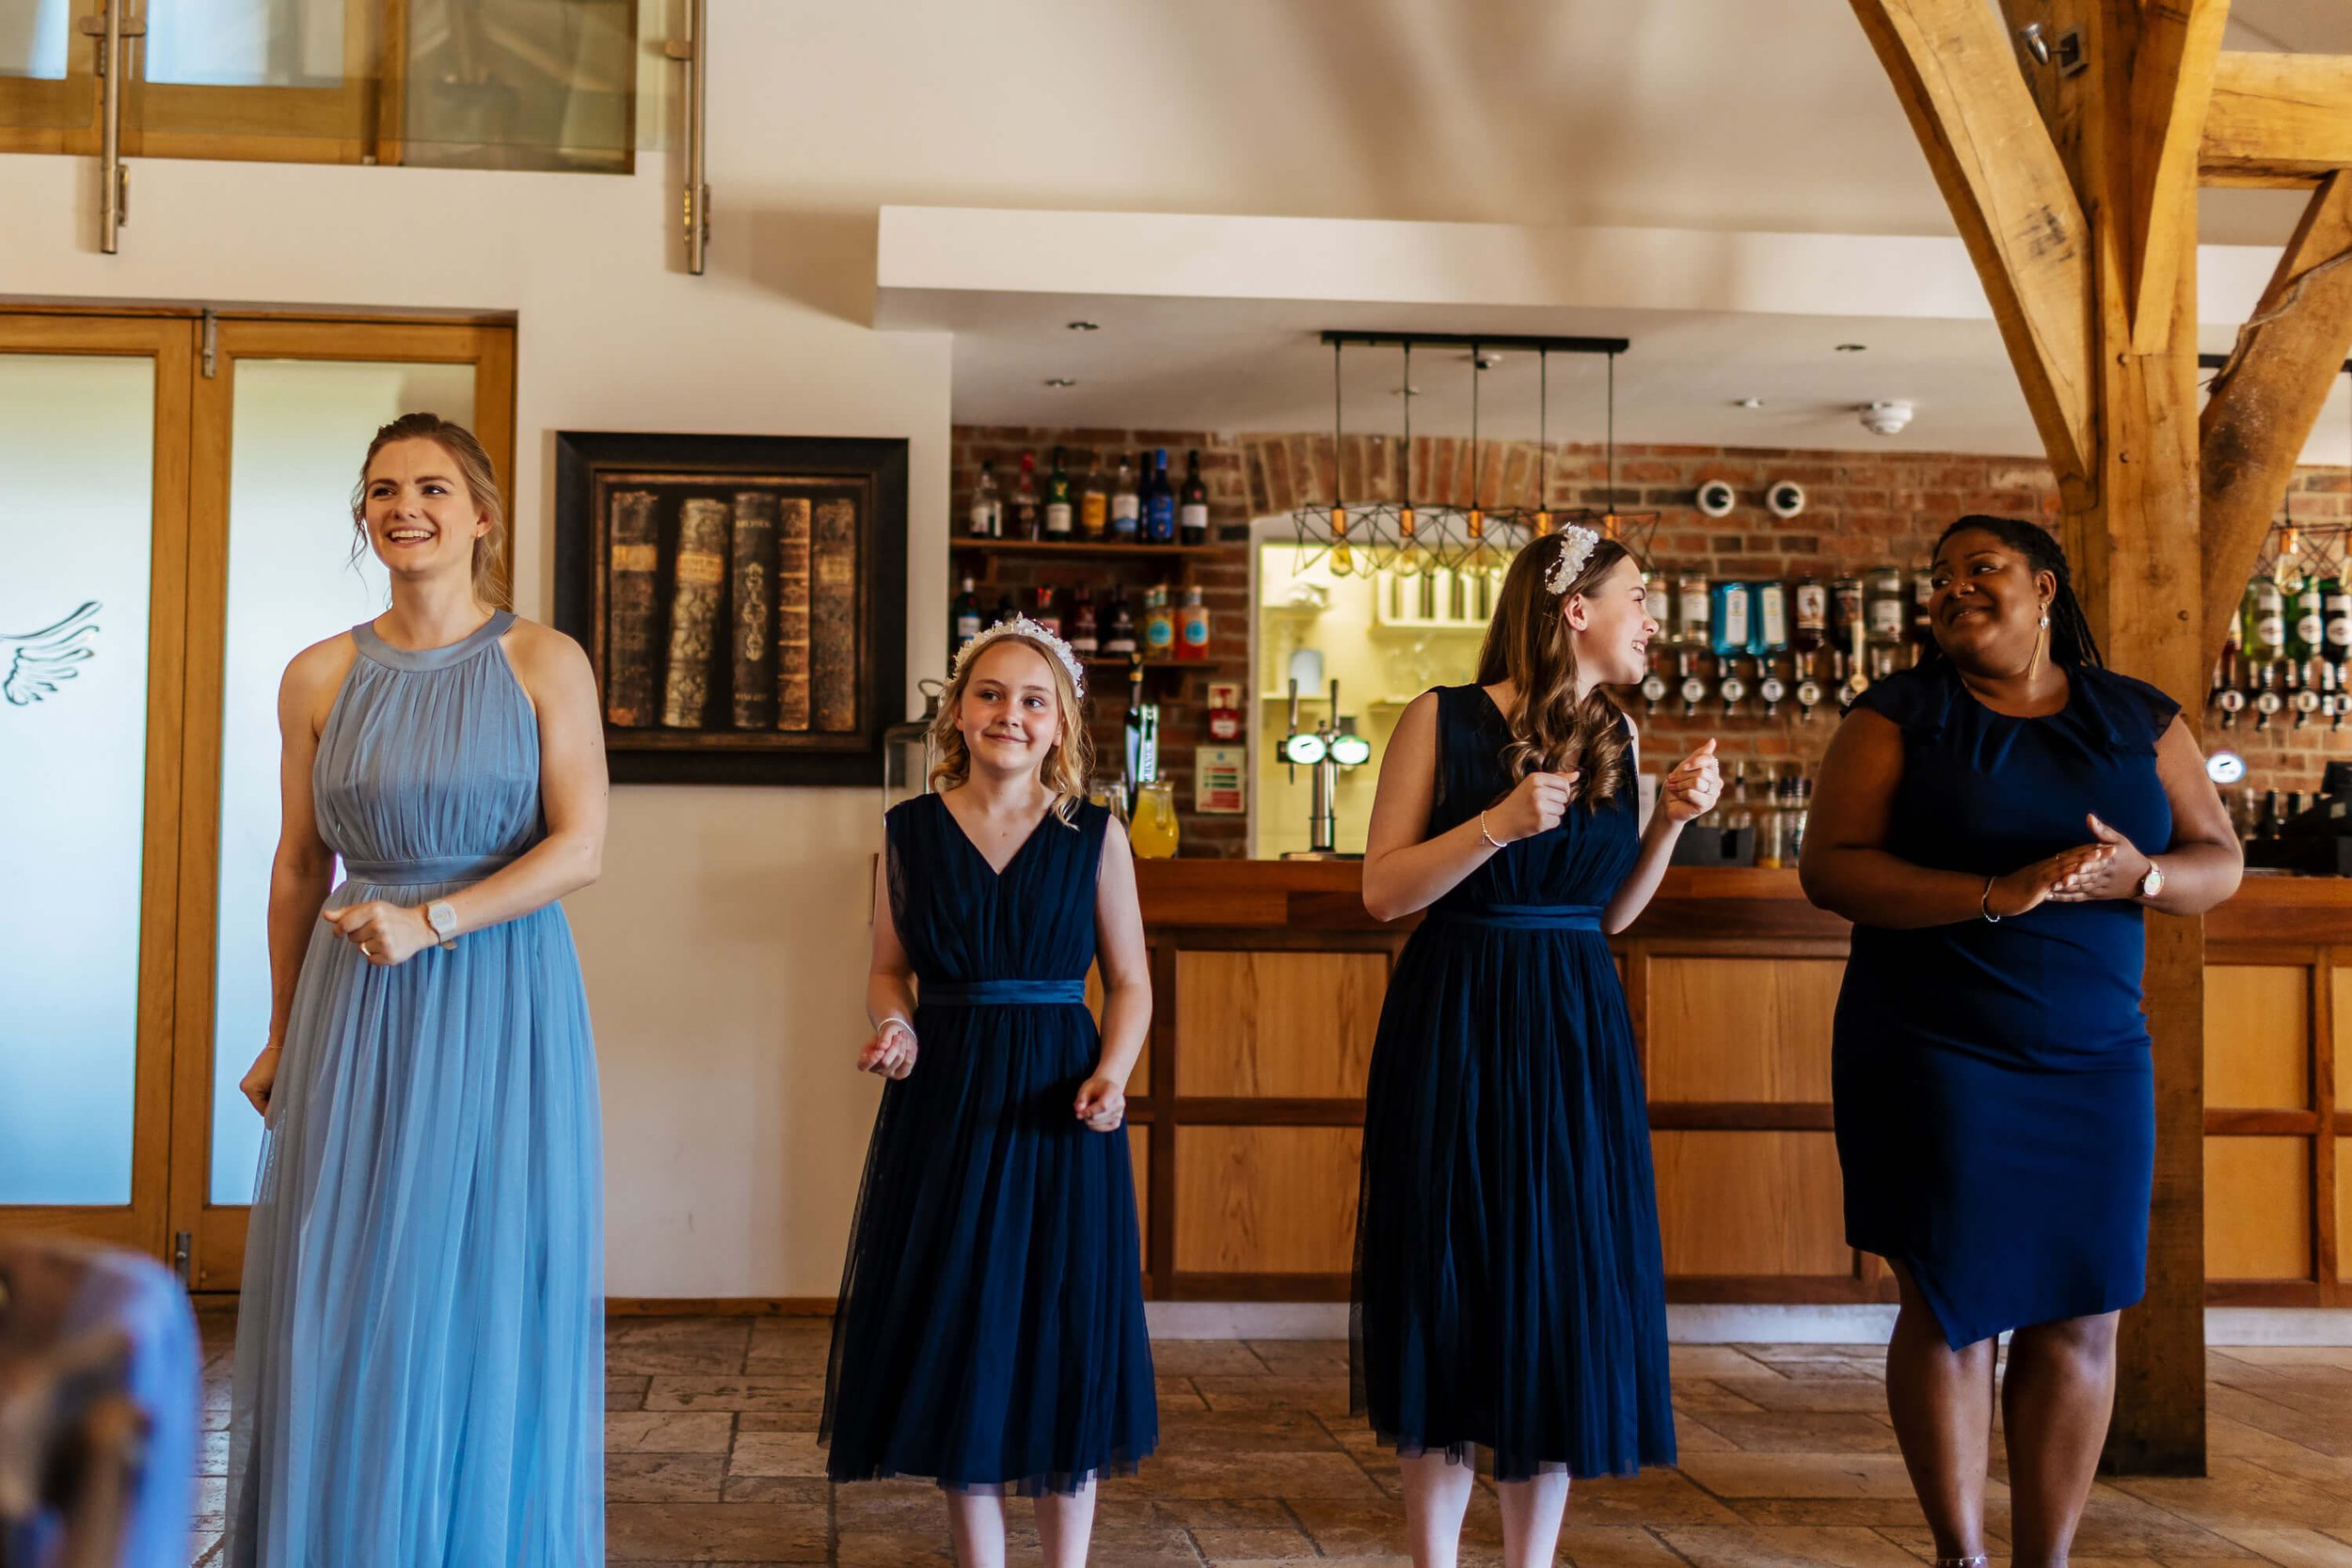 A flash mob of bridesmaid singers at a wedding